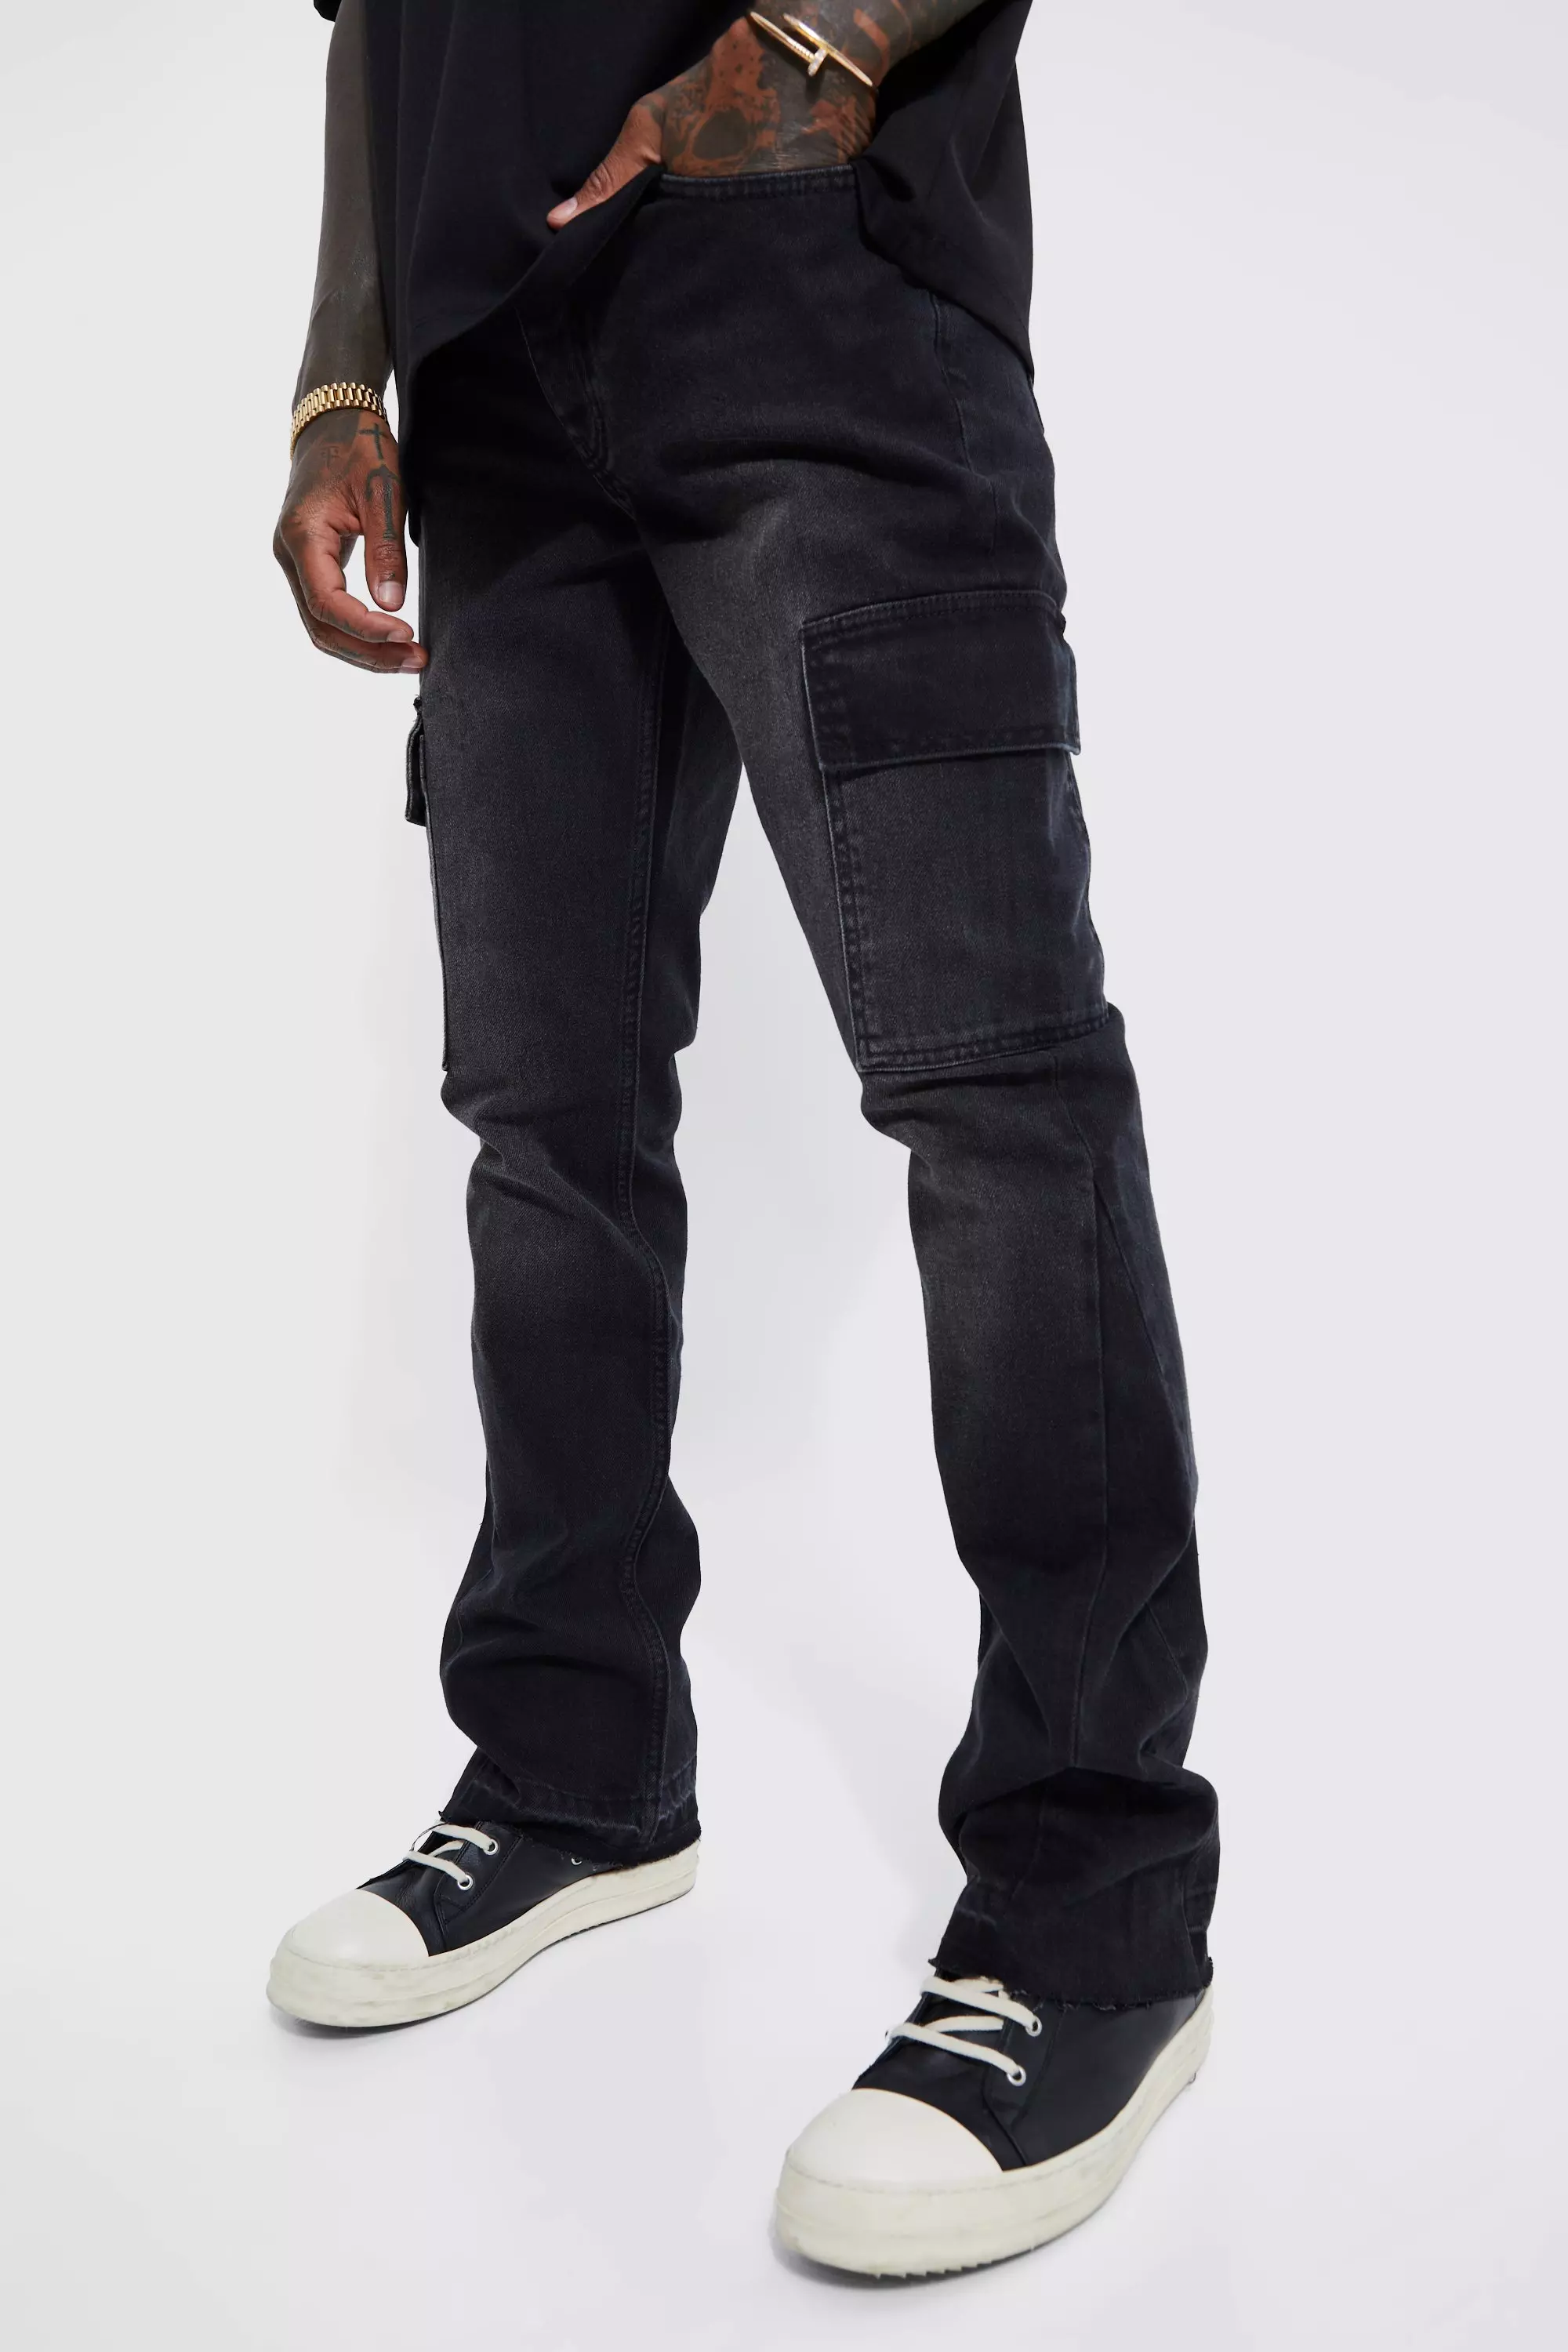 Custom Flare Pants Men's Flared Sweatpants Unisex Slim Fit